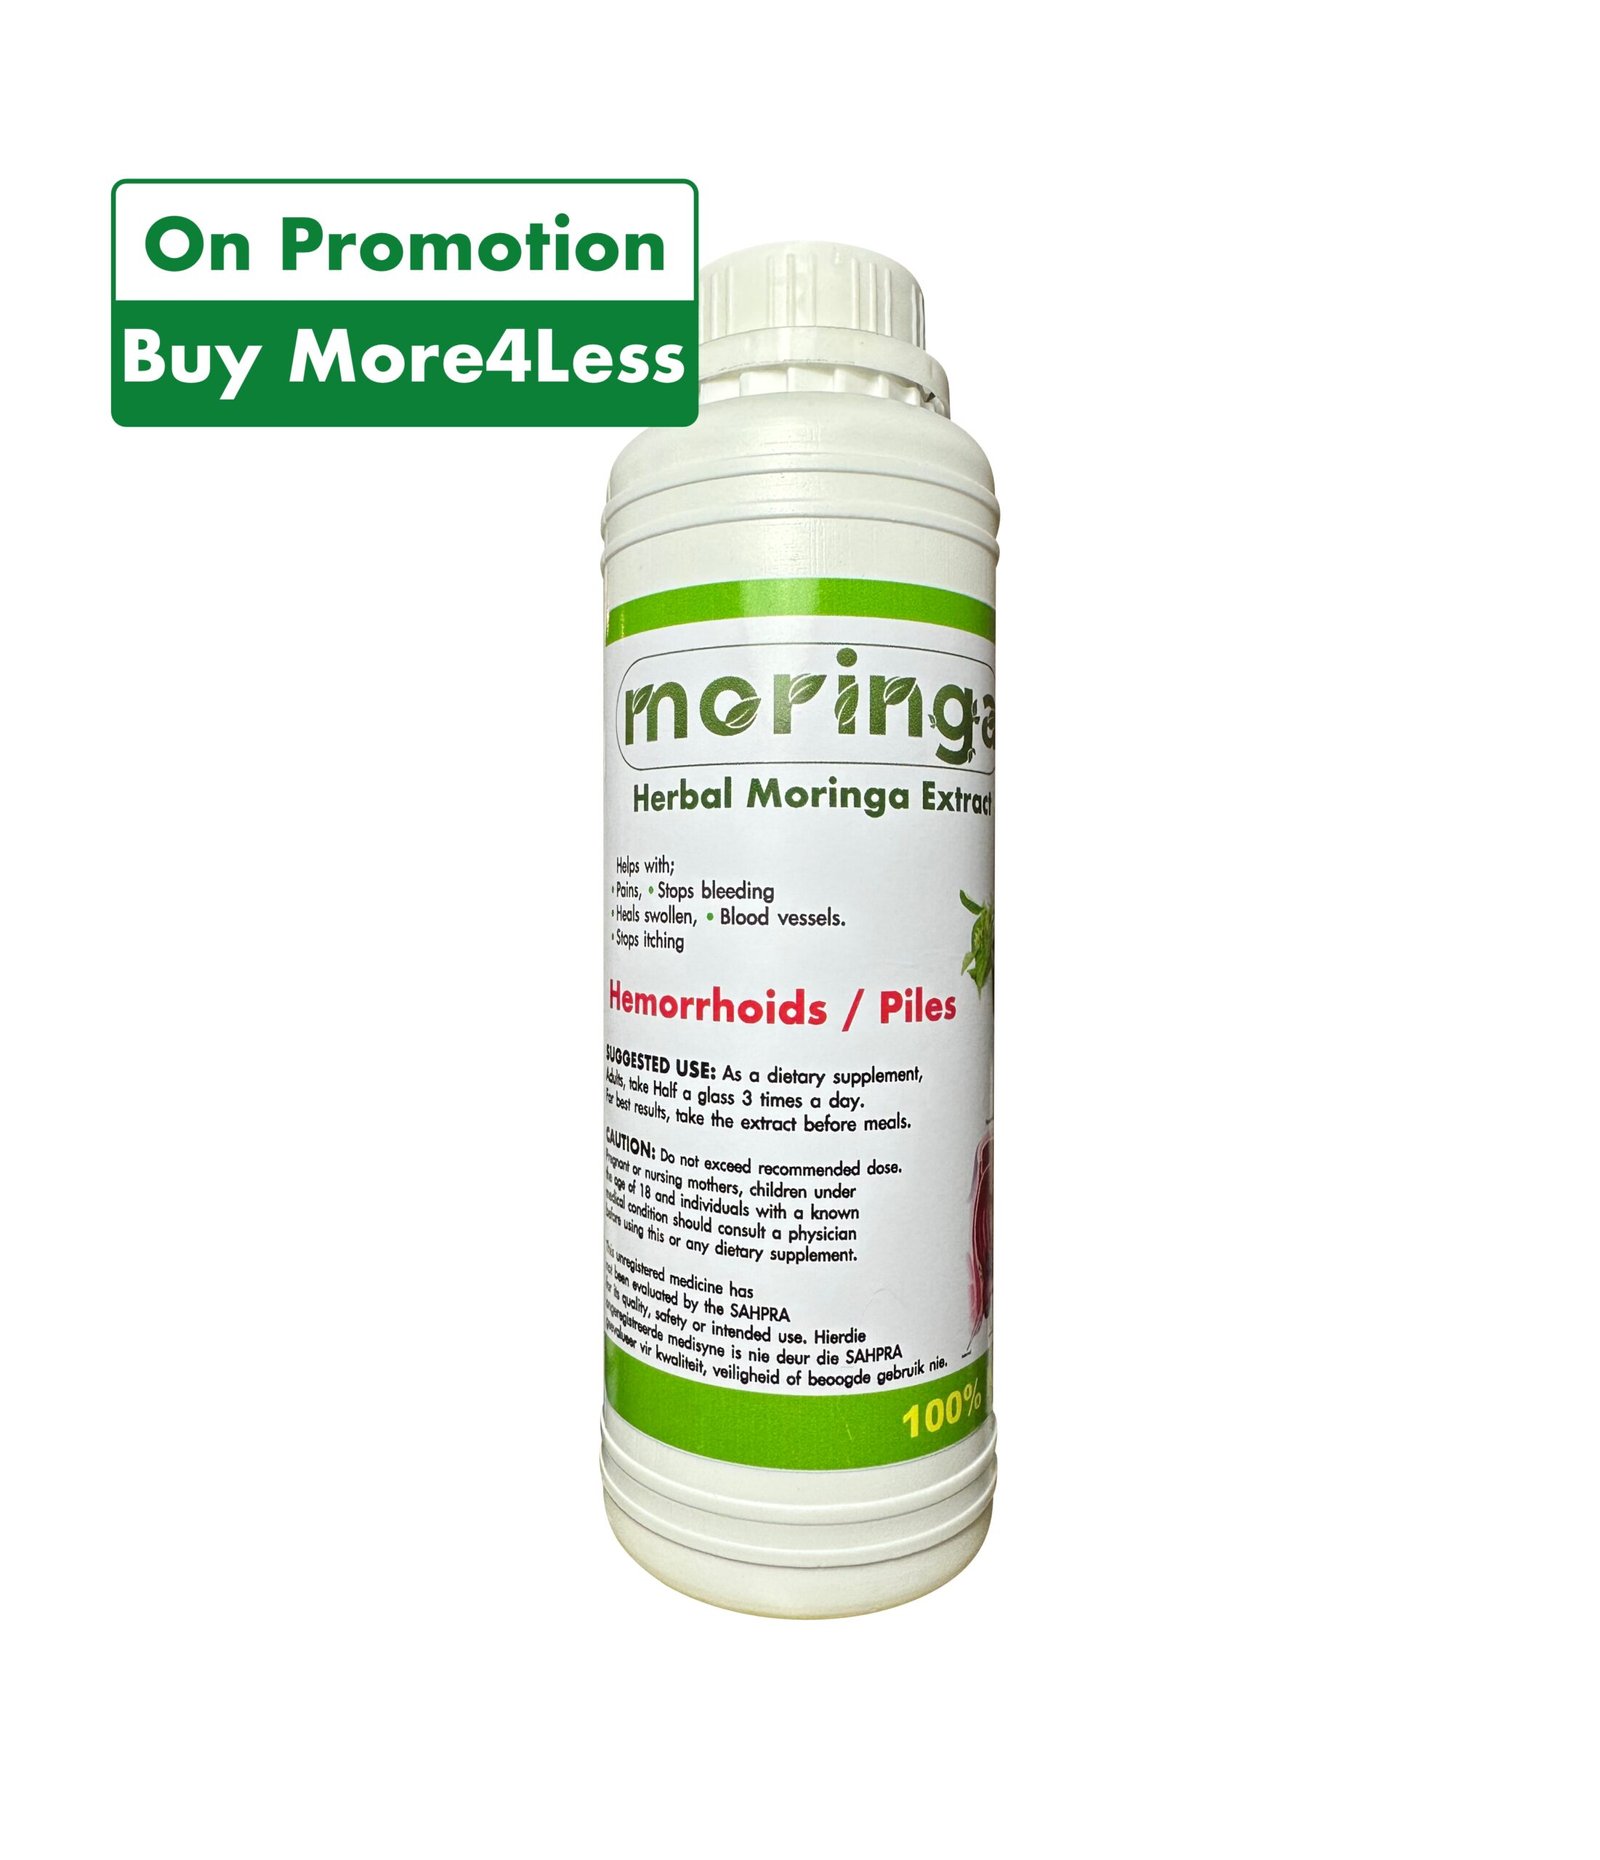 Moringa Concentrate Complex for hemorrhoids